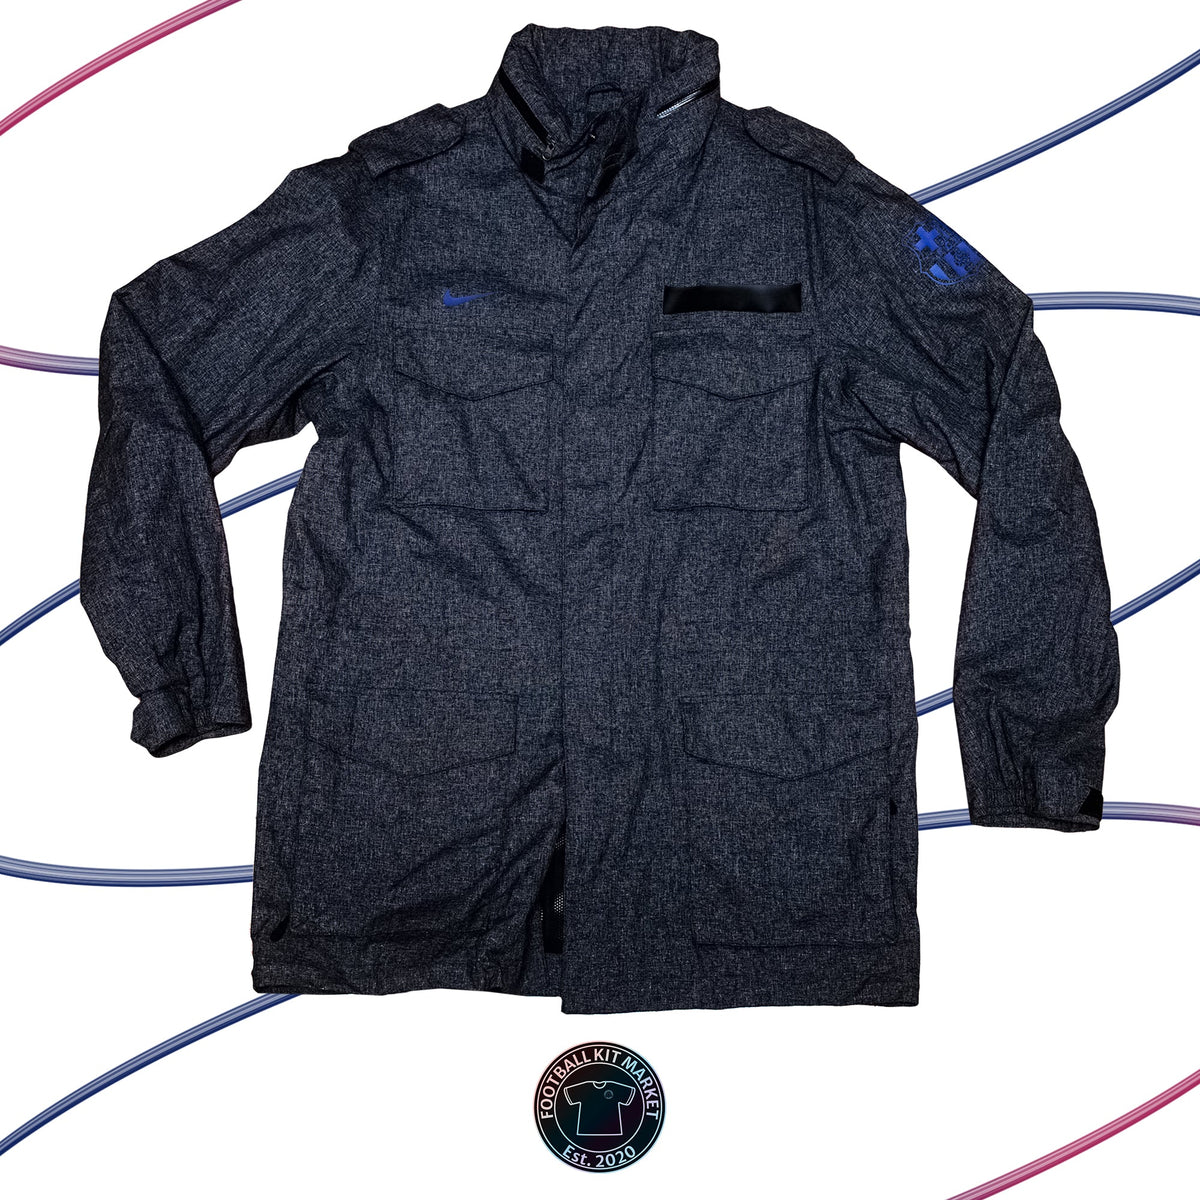 Genuine BARCELONA Military-style Jacket (2011-2012) - NIKE (M) - Product Image from Football Kit Market